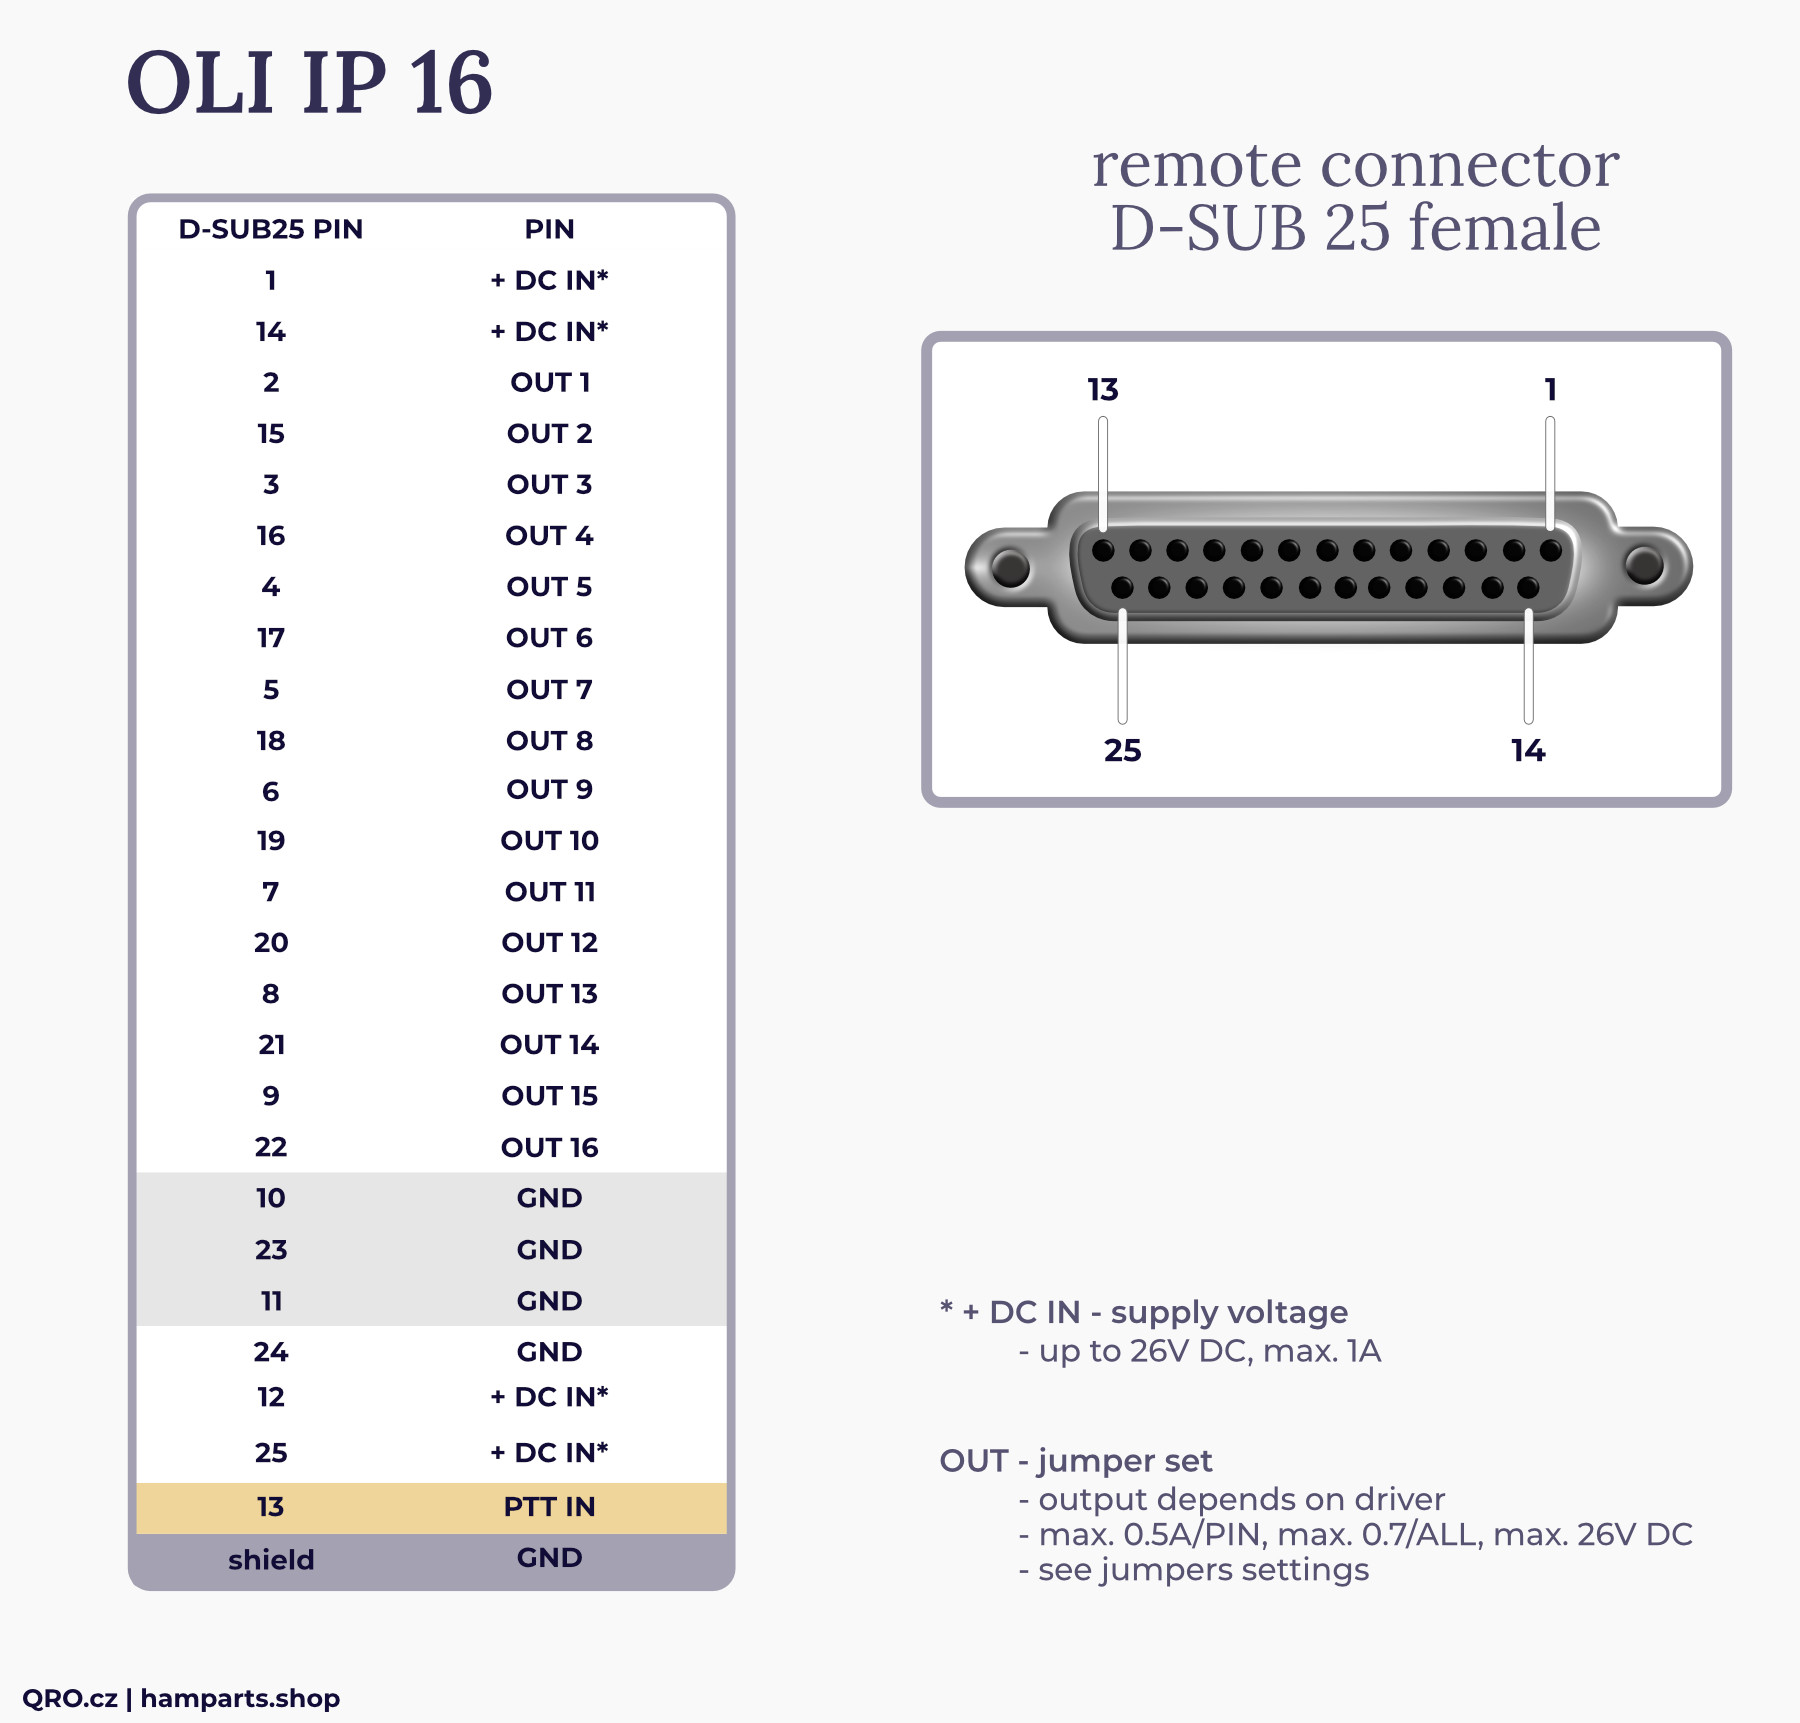 oli ip 16 connector db25 female qro.cz hamparts.shop